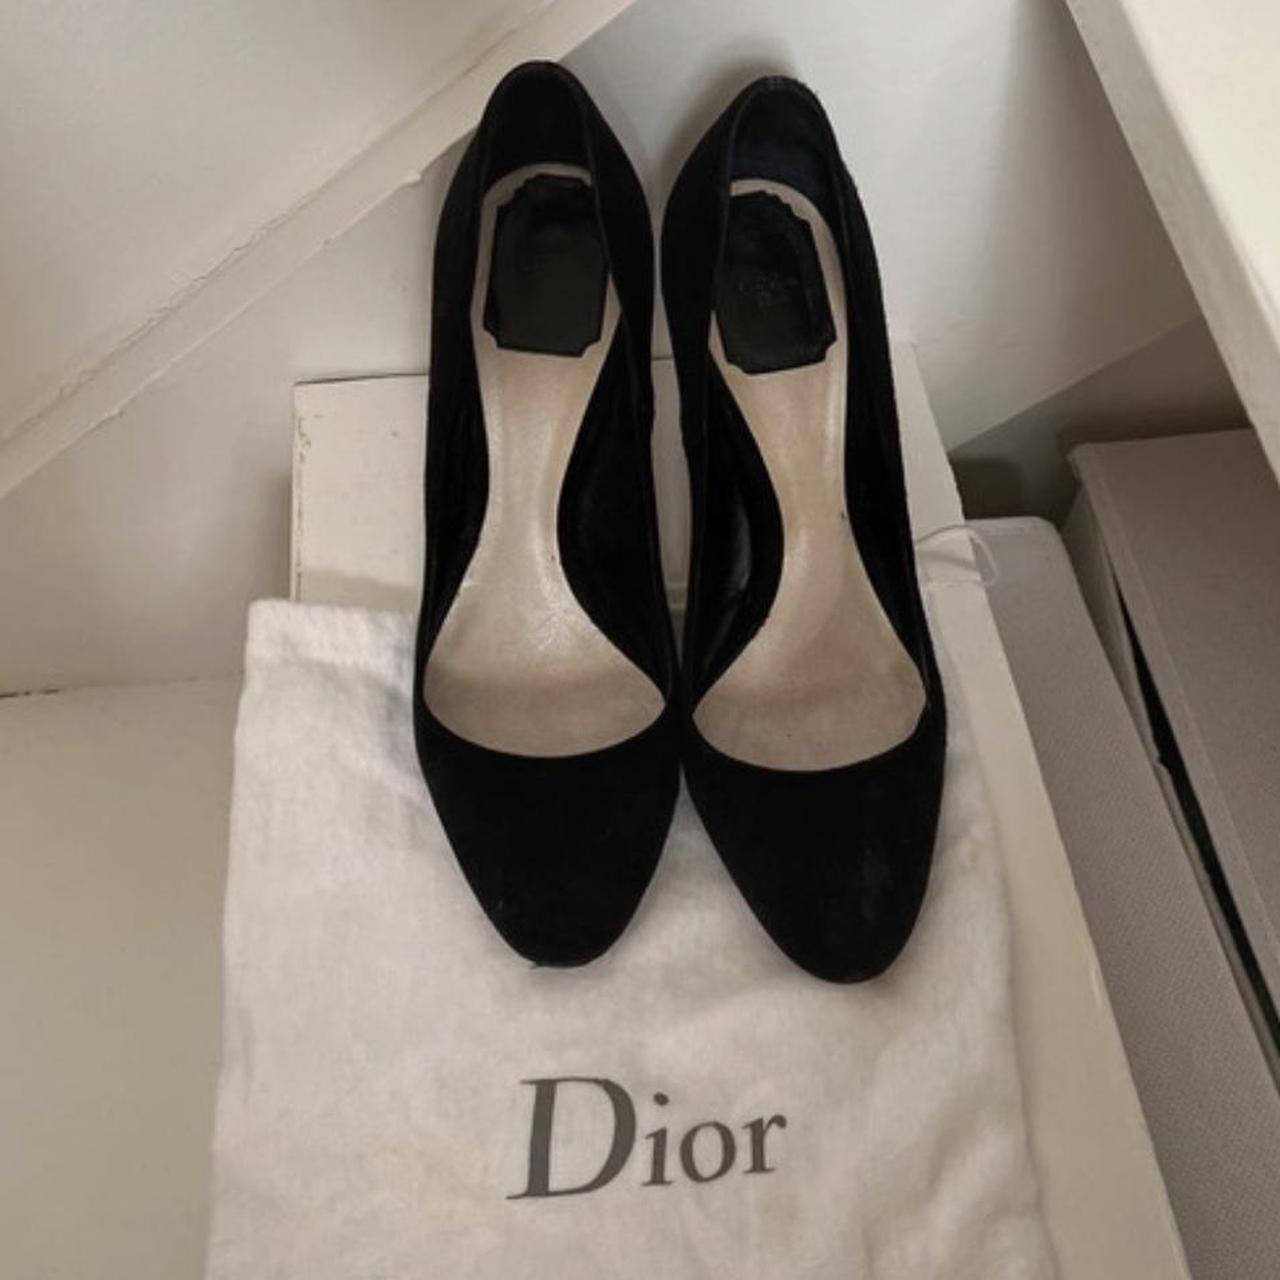 Christian Dior high heeled black suede pumps. Worn a... - Depop